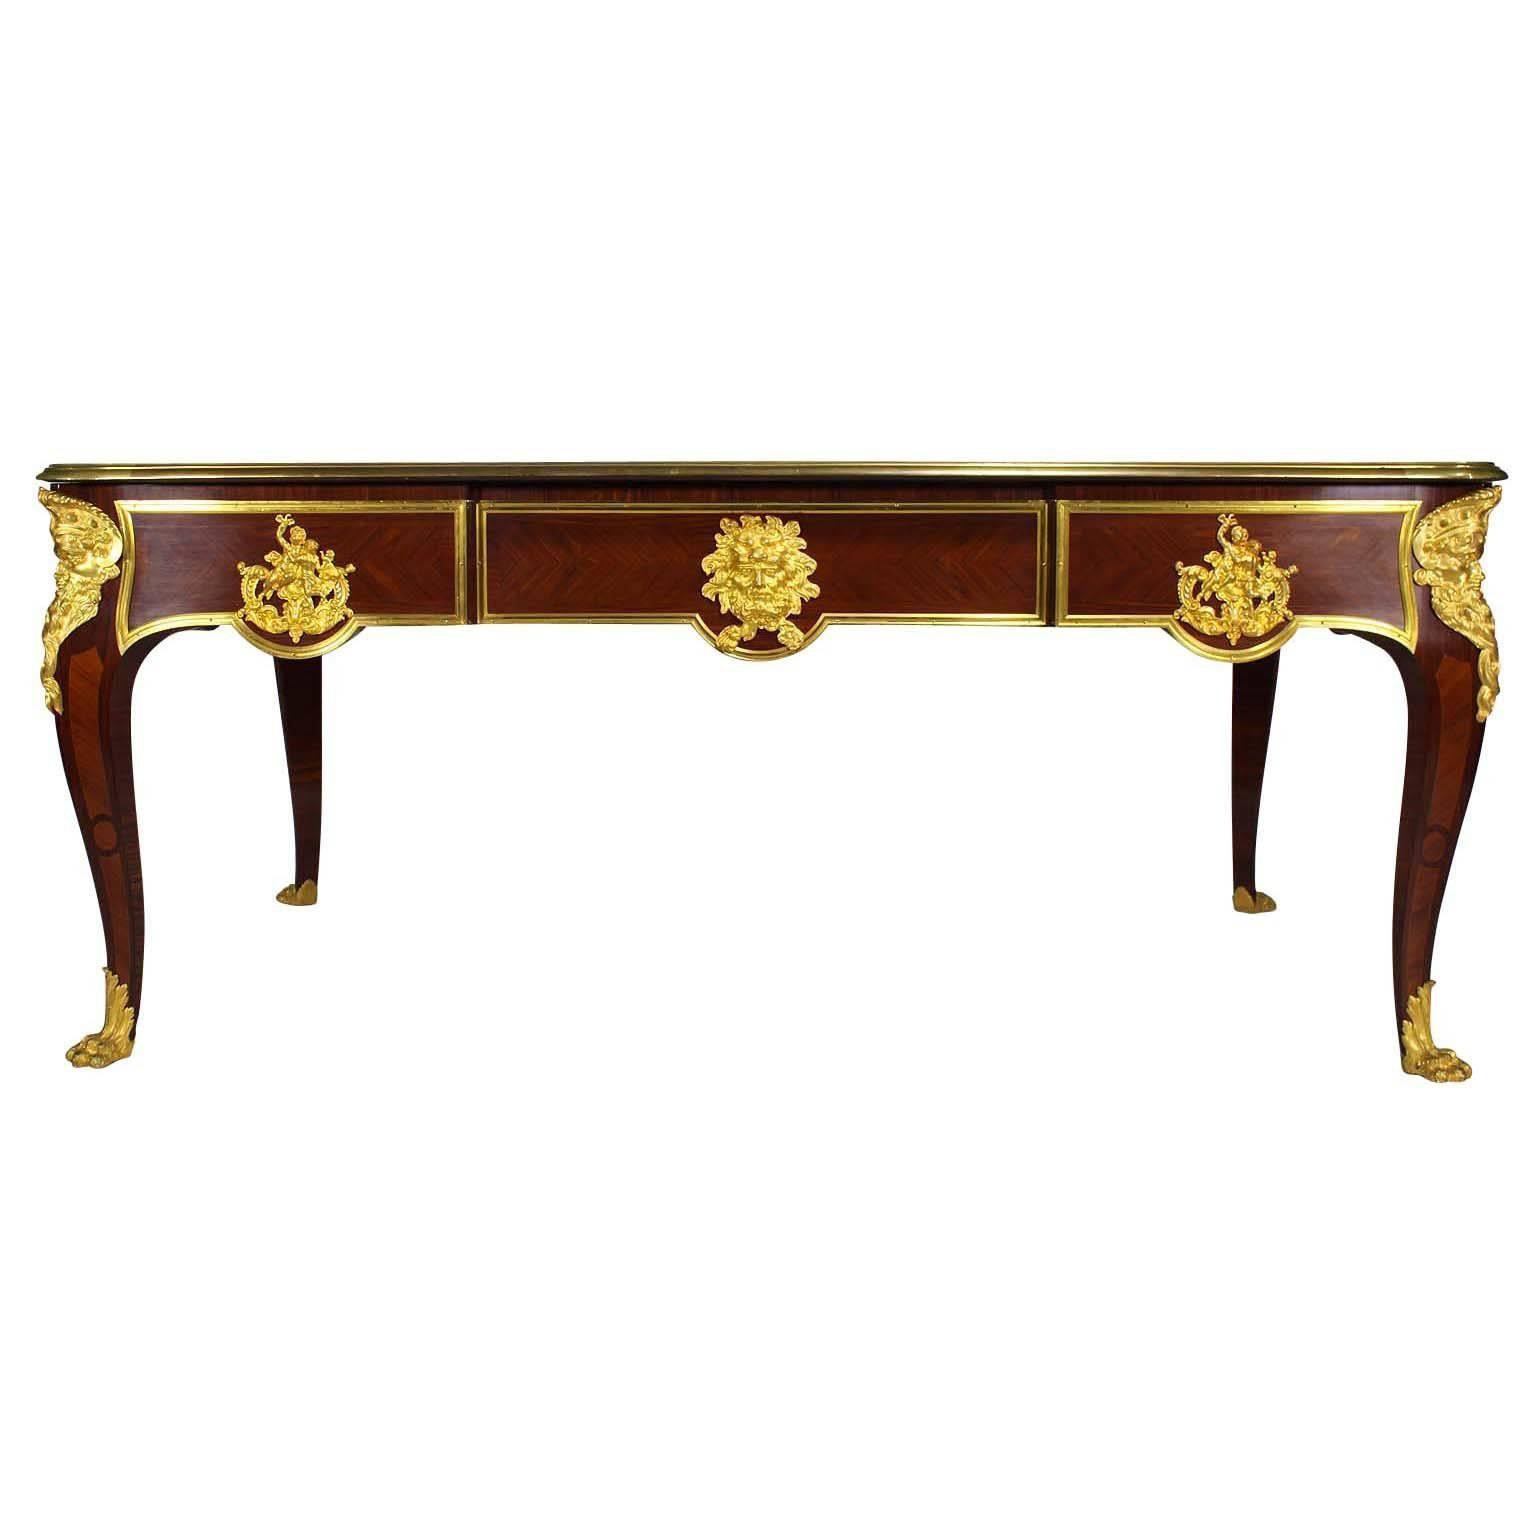 French 19th Century Louis XV Style Ormolu-Mounted Bureau Plat Desk For Sale